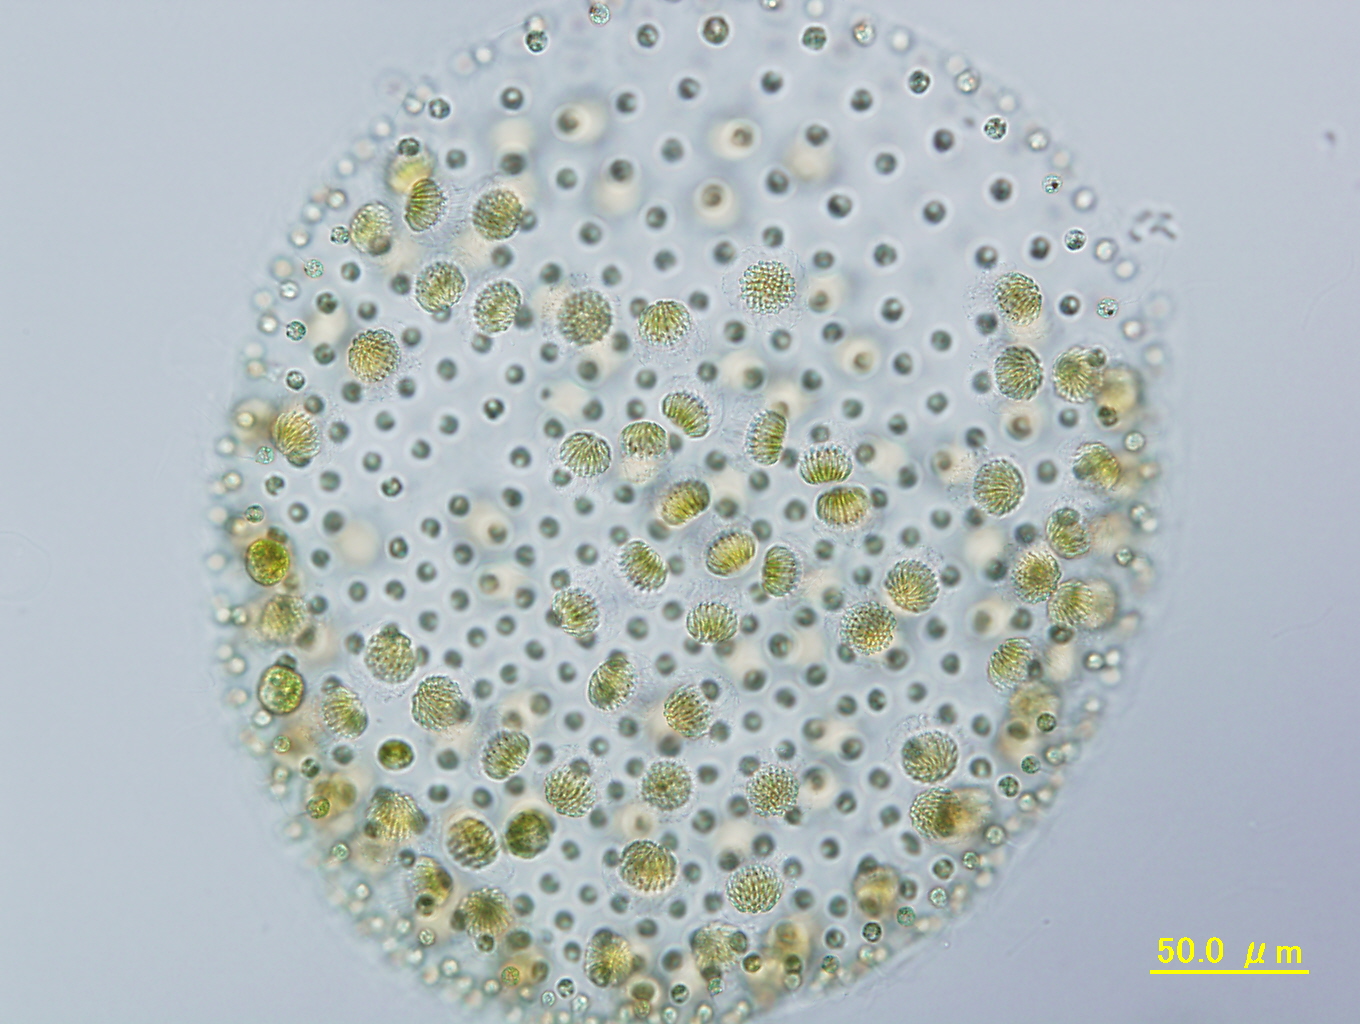 Male spheroid showing sperm packets (bundles of male gametes)